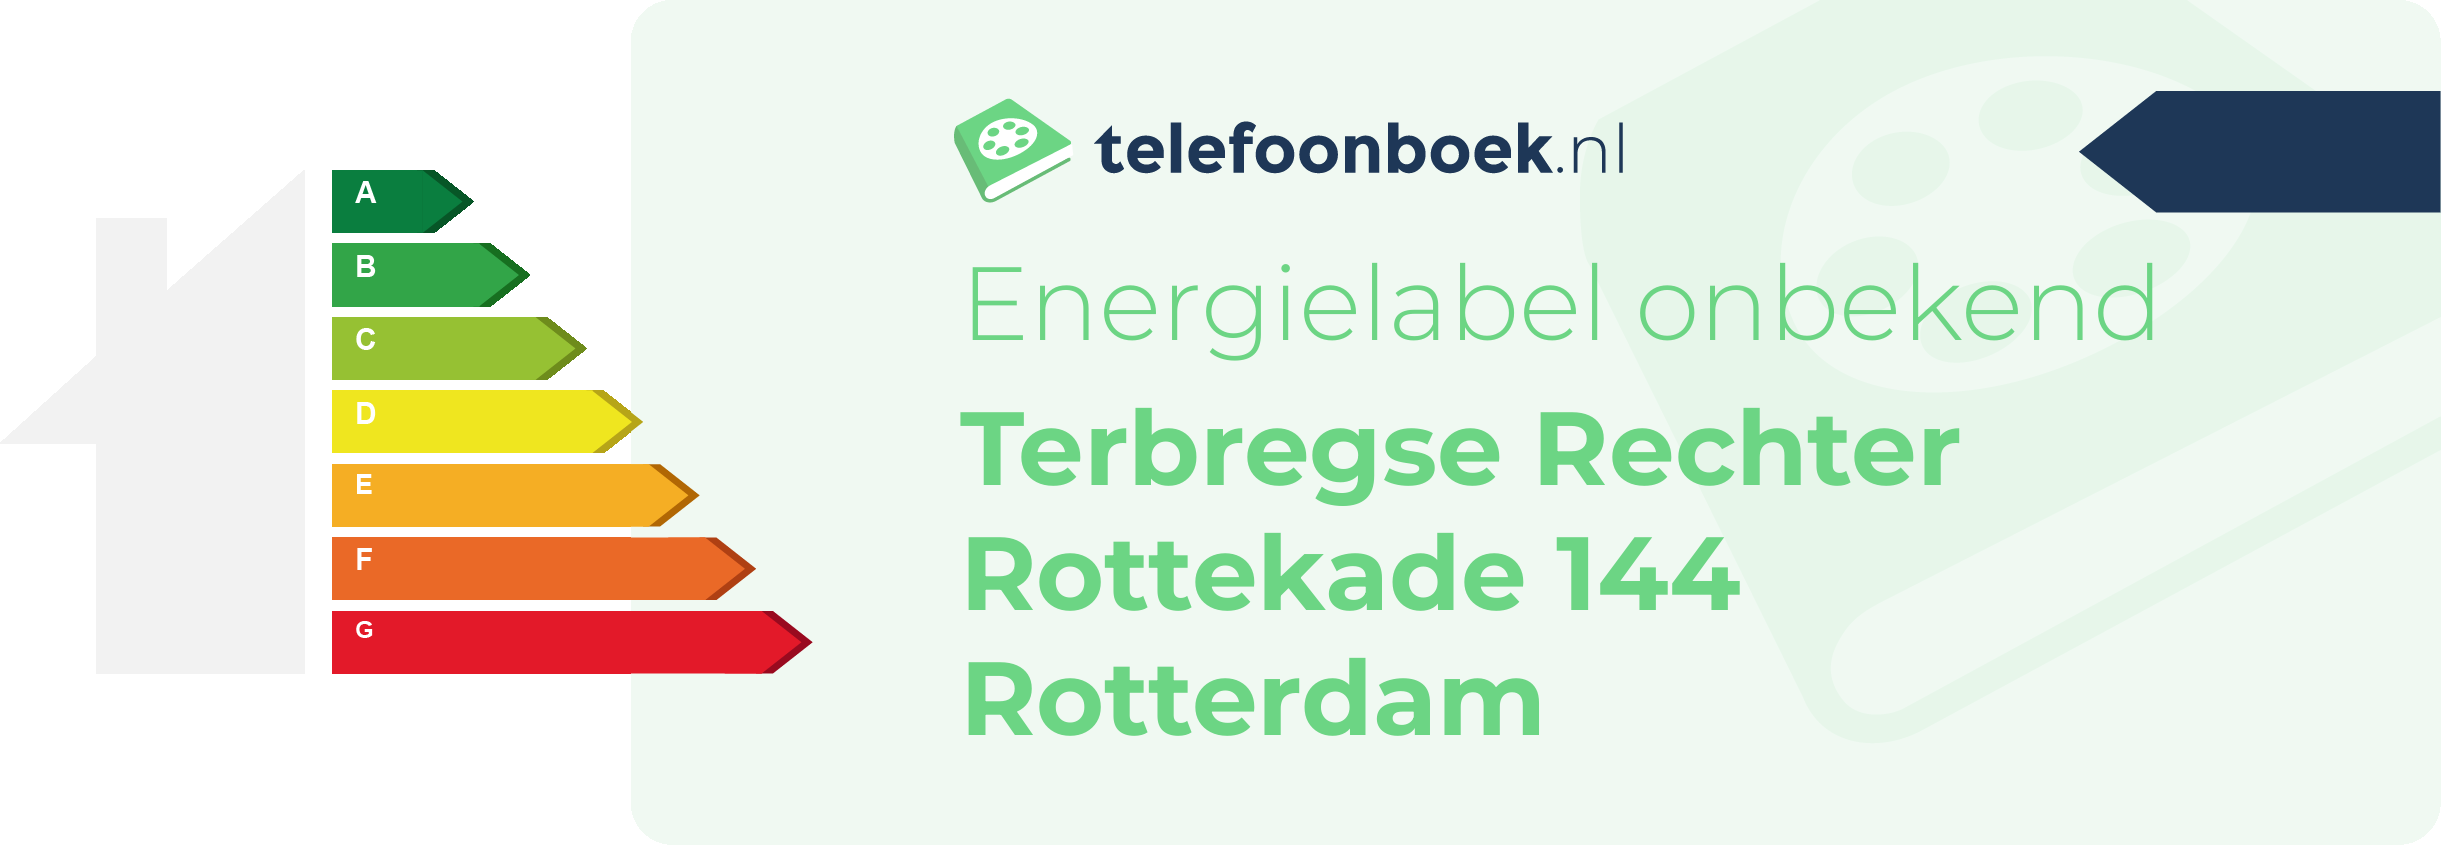 Energielabel Terbregse Rechter Rottekade 144 Rotterdam